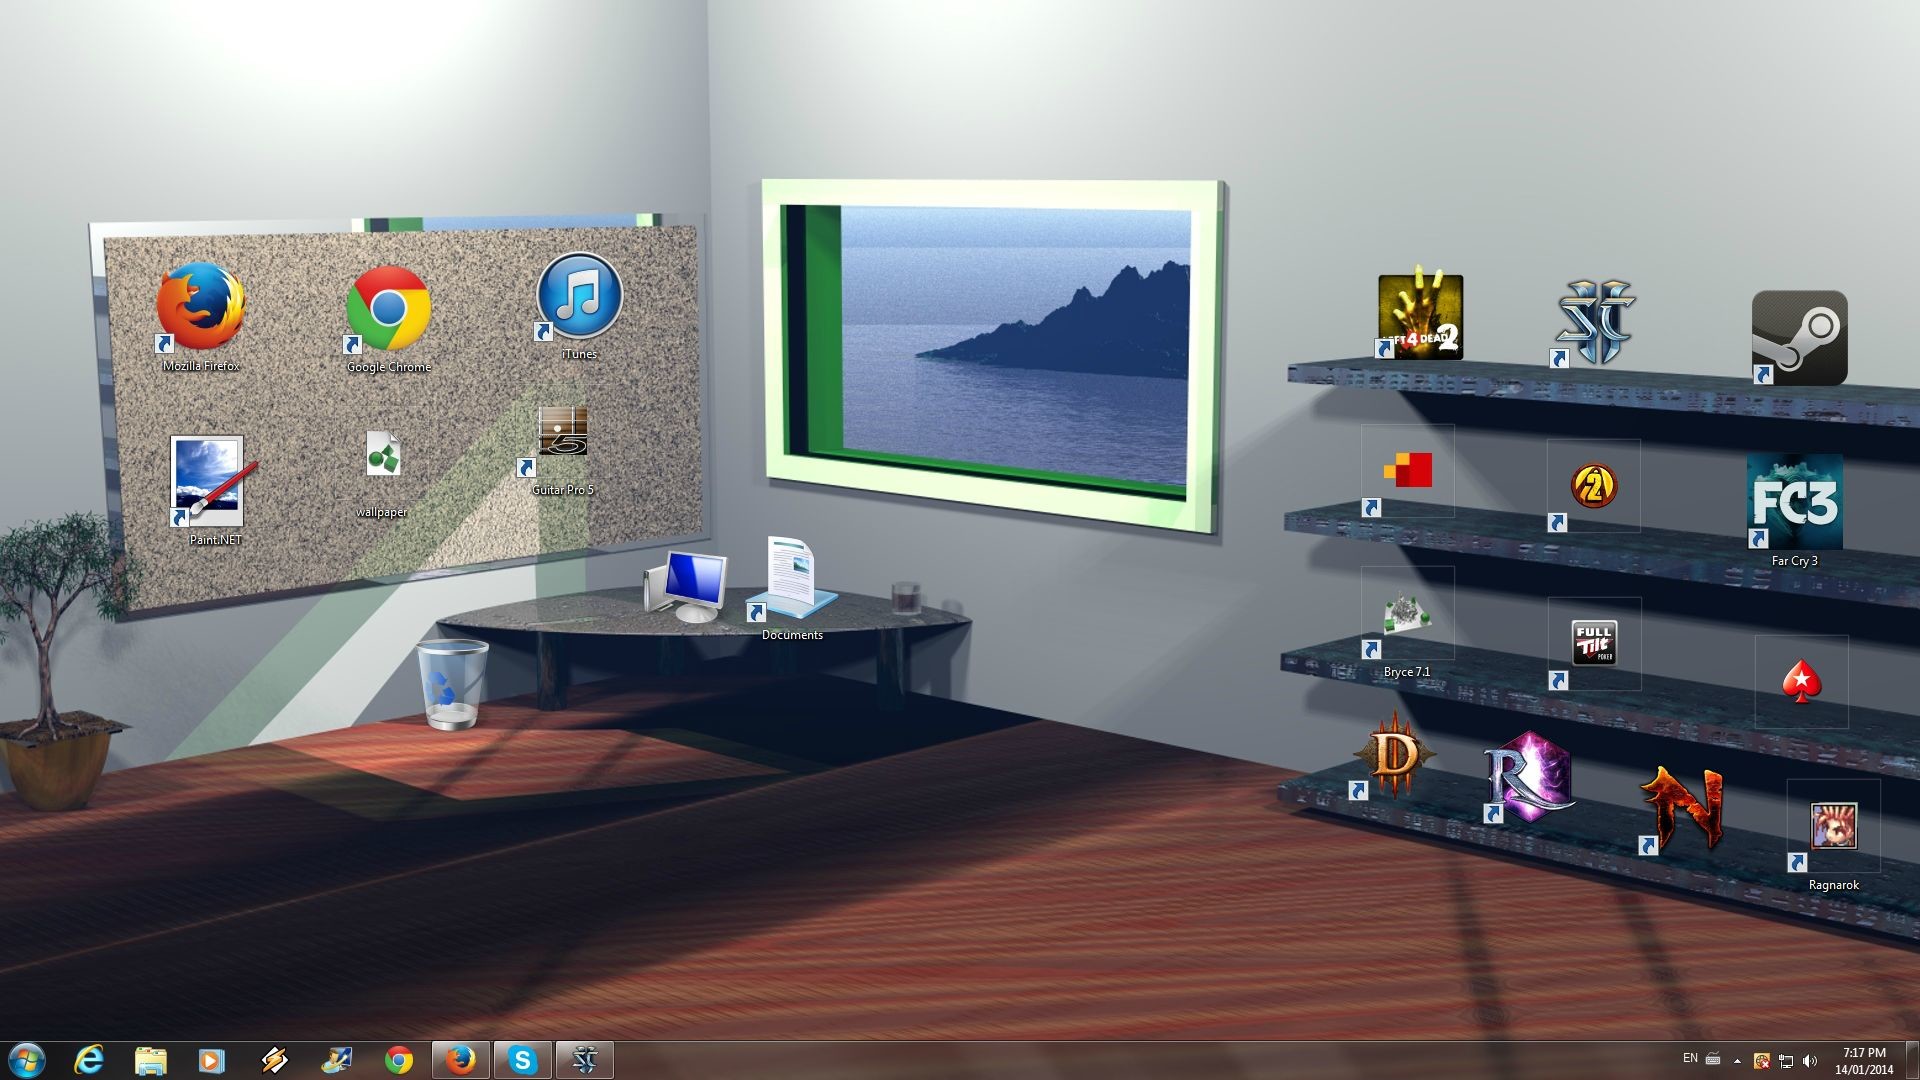 desktop wallpaper icon organizer